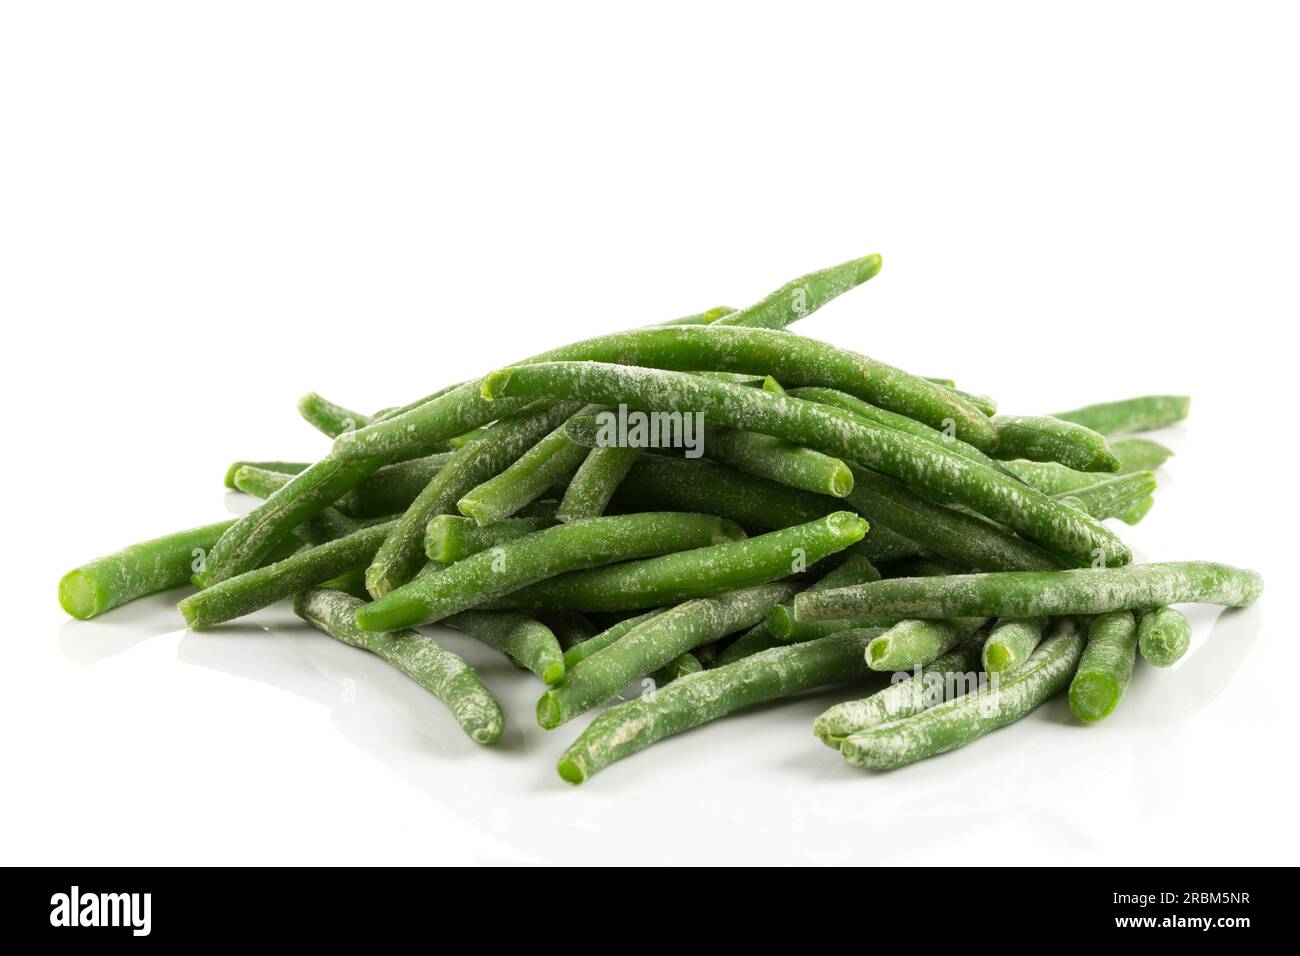 https://c8.alamy.com/comp/2RBM5NR/frozen-cut-green-beans-vegetable-in-a-bowl-isolated-on-white-2RBM5NR.jpg